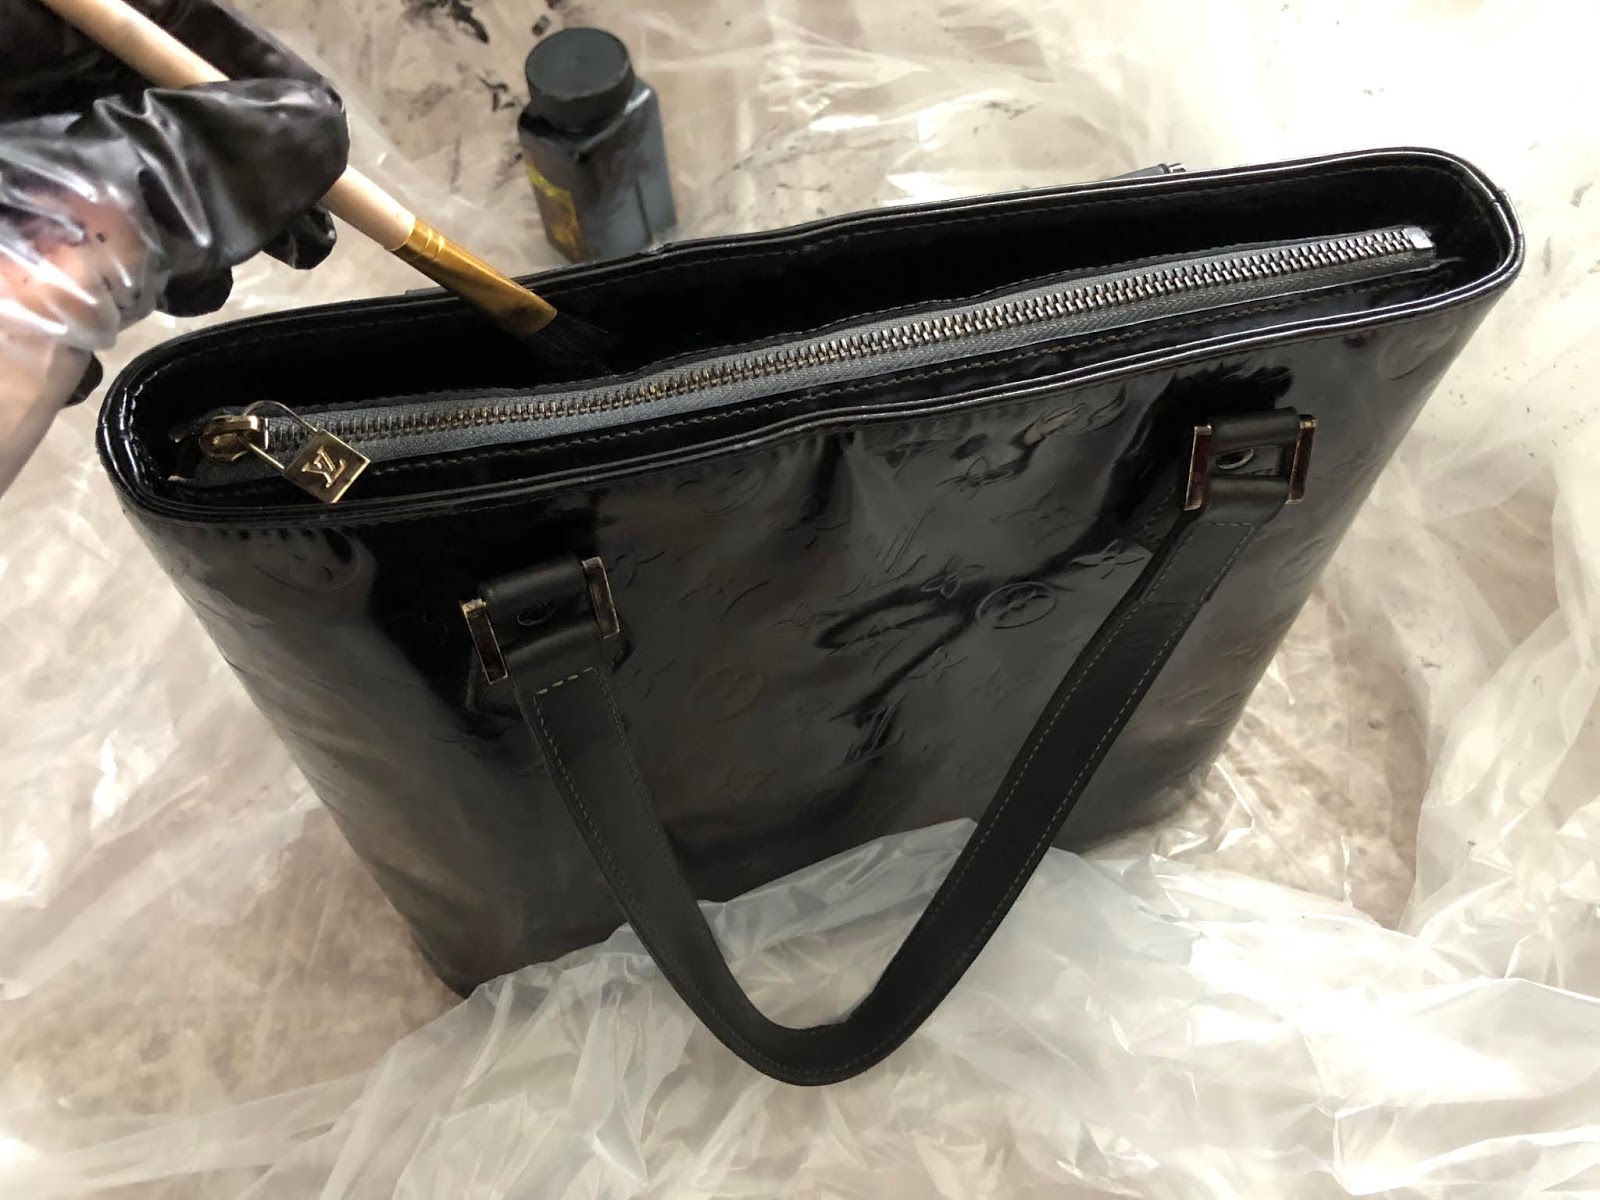 Black Beauty to Dye for - LV Vernis Lexington bag dyed using Fiebing